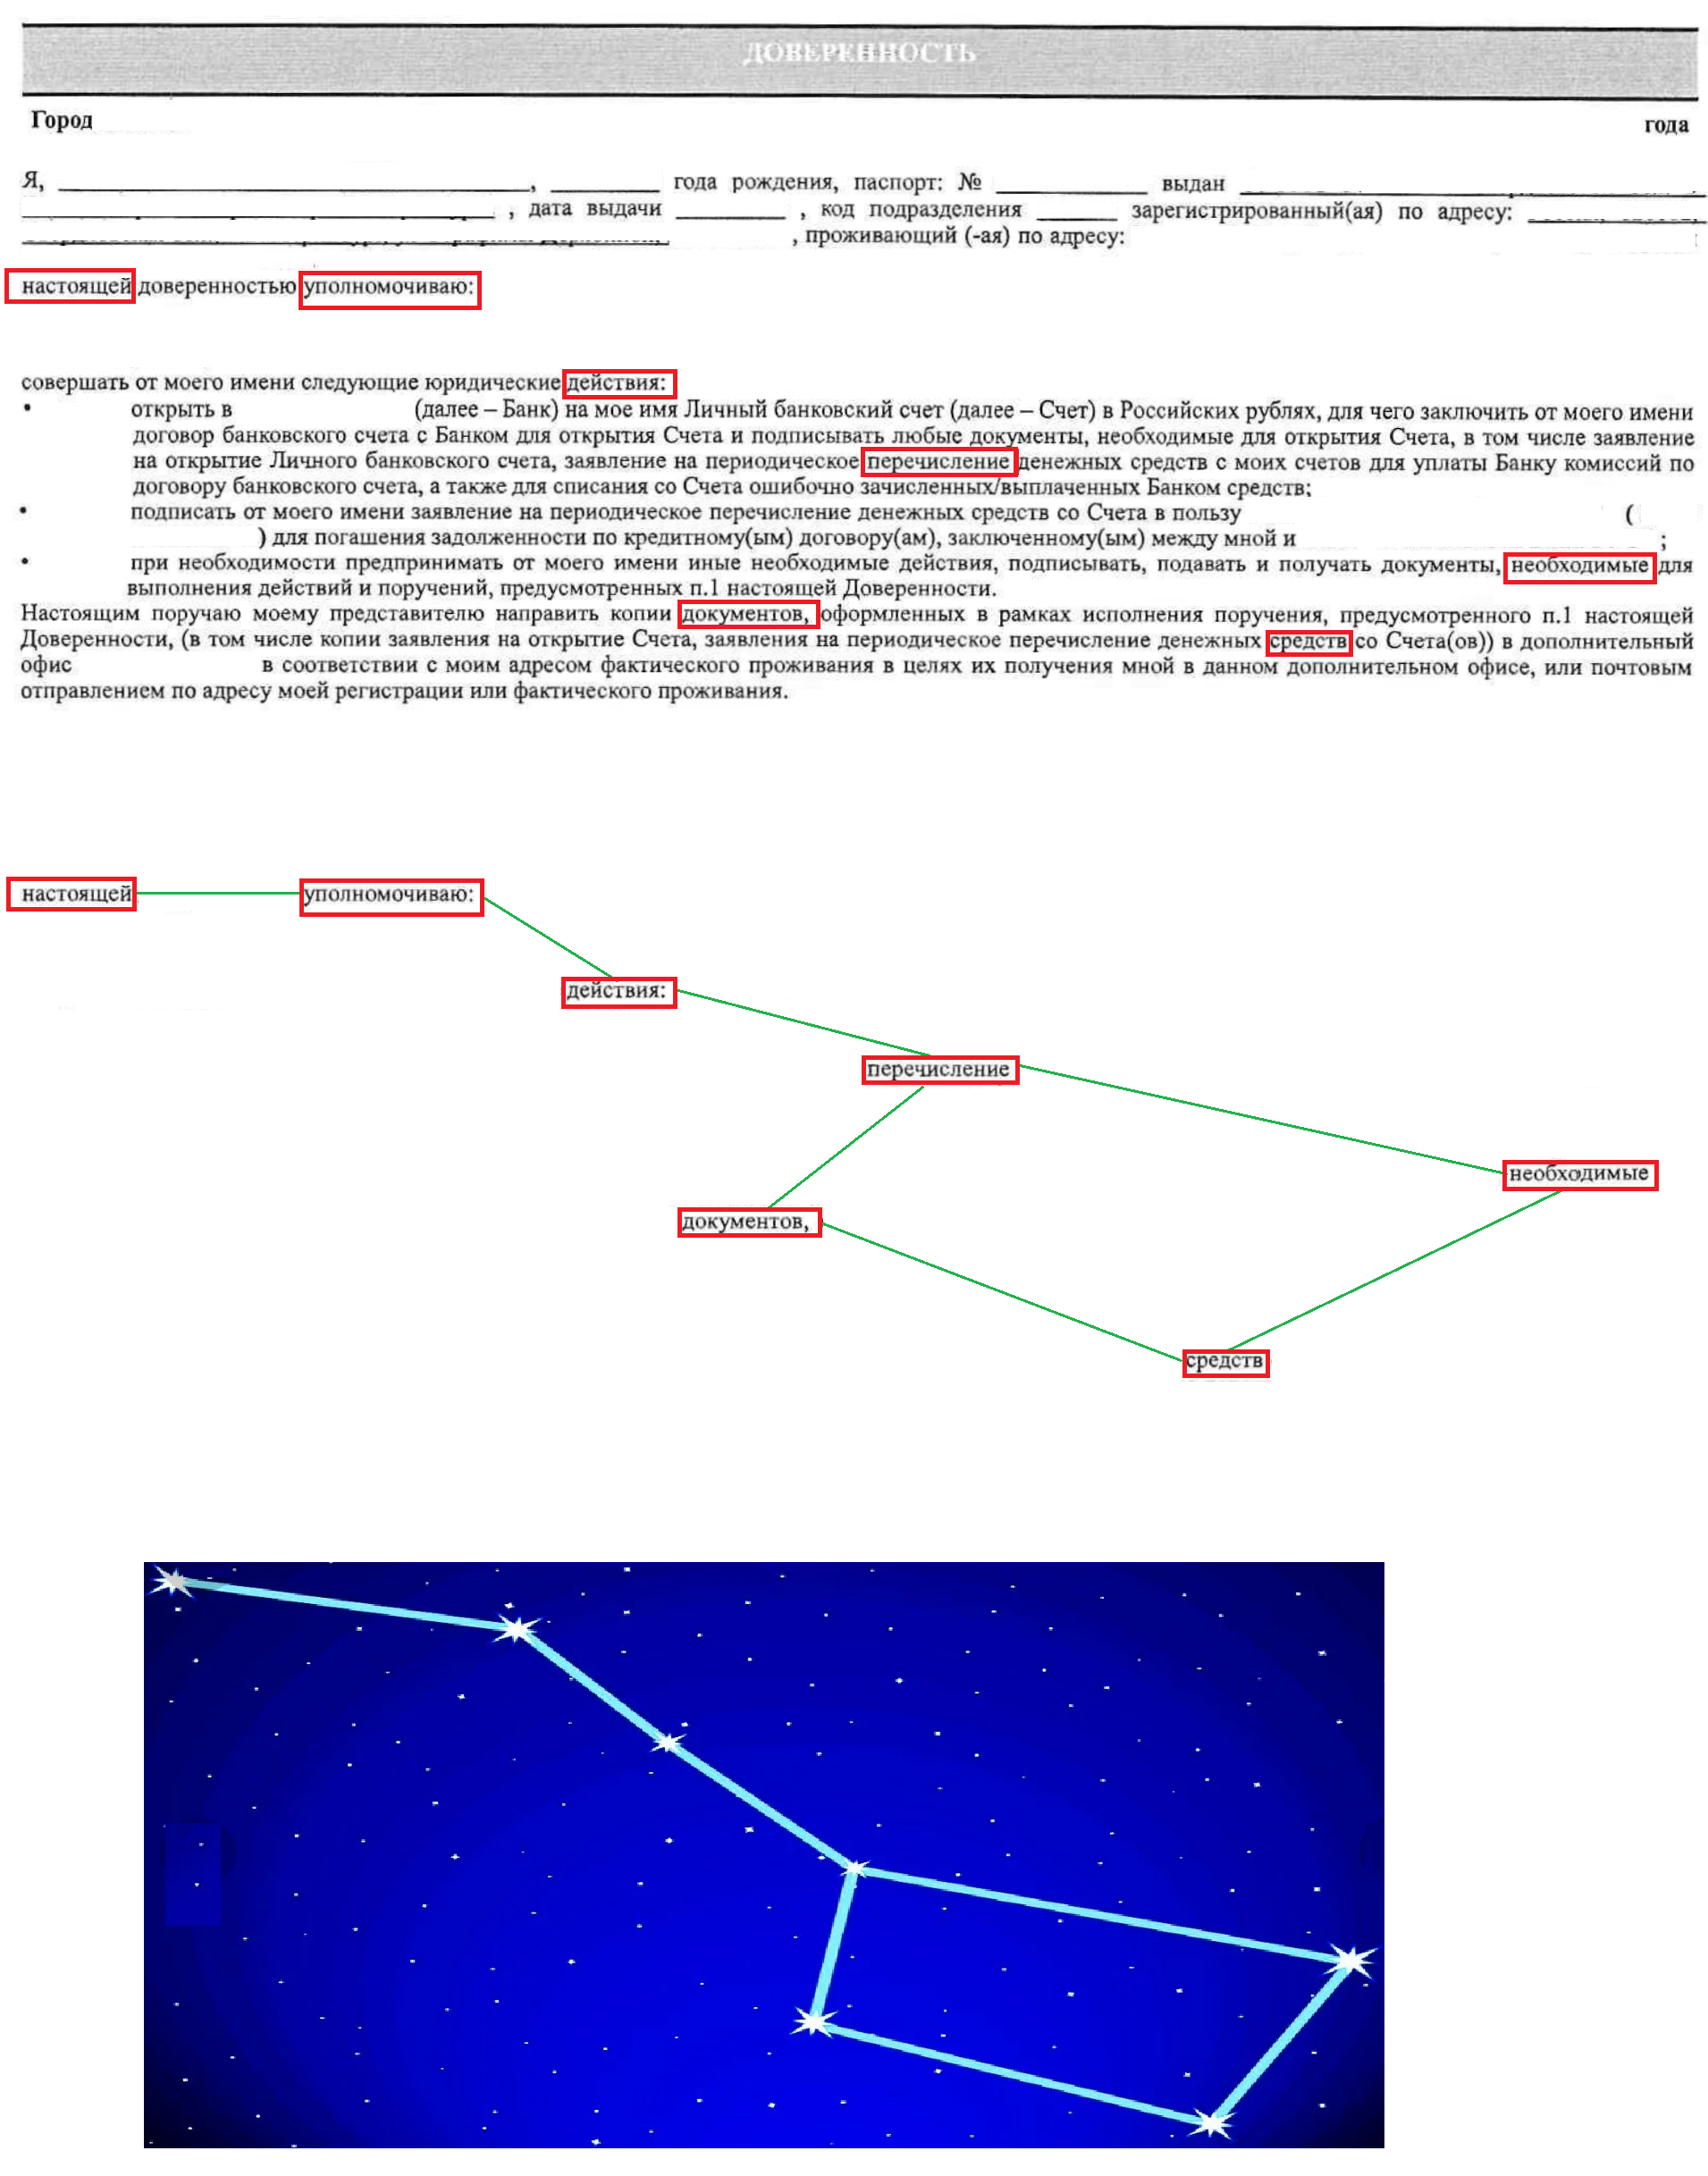 Рис. 4 — Созвездие Big Dipper во фрагменте делового документа